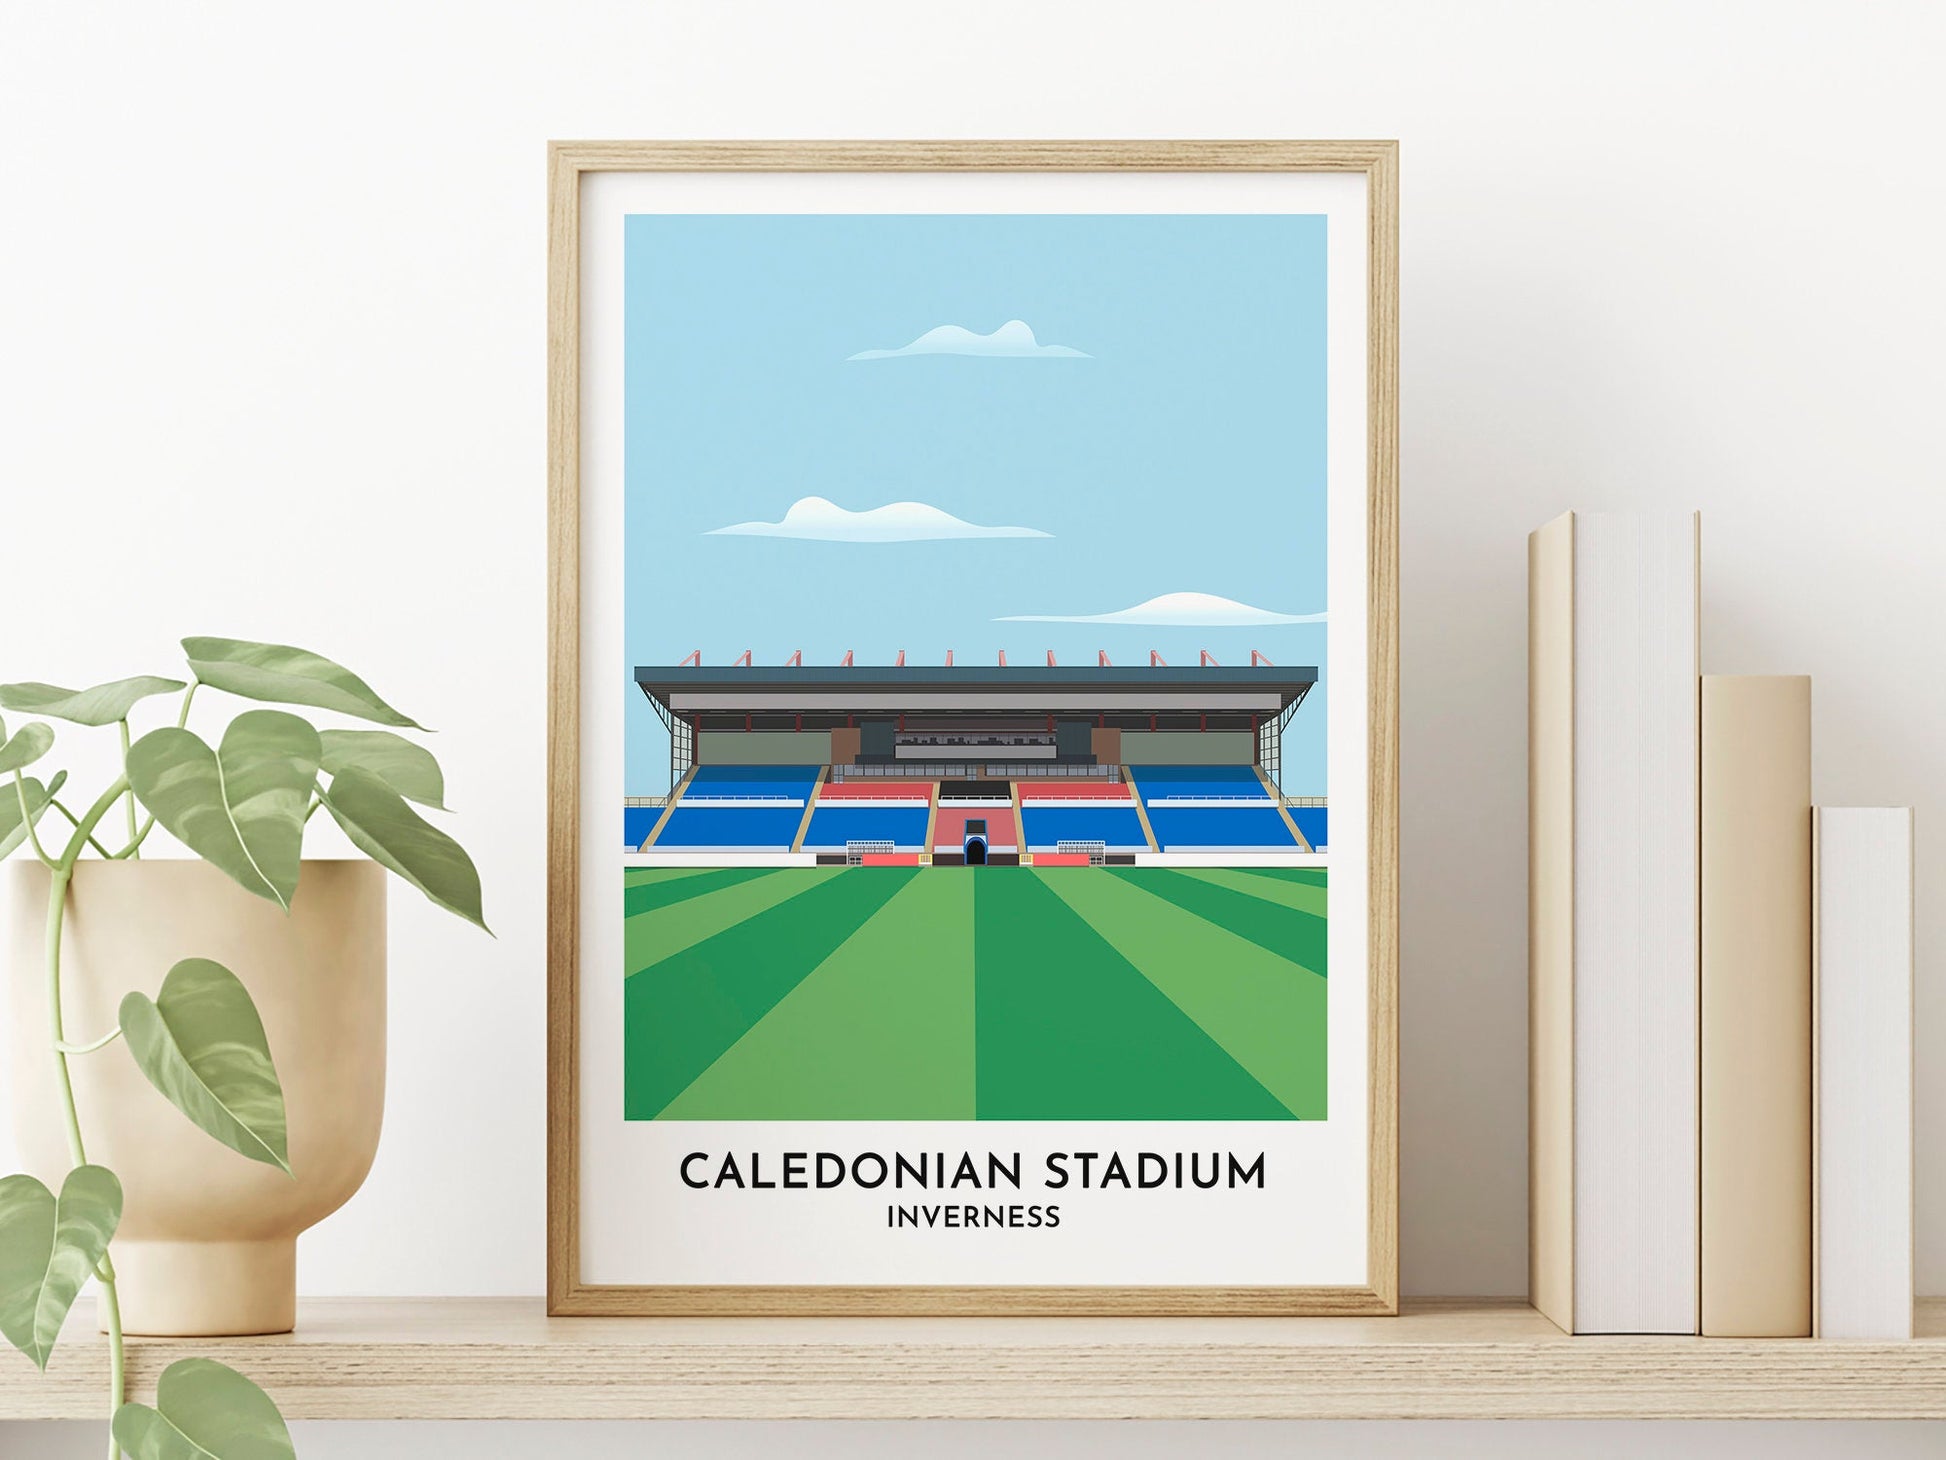 Inverness Caledonian Thistle Stadium Print, Caledonian Stadium Digital Illustrated Artwork, Personalised Gift for Him or Her - Turf Football Art